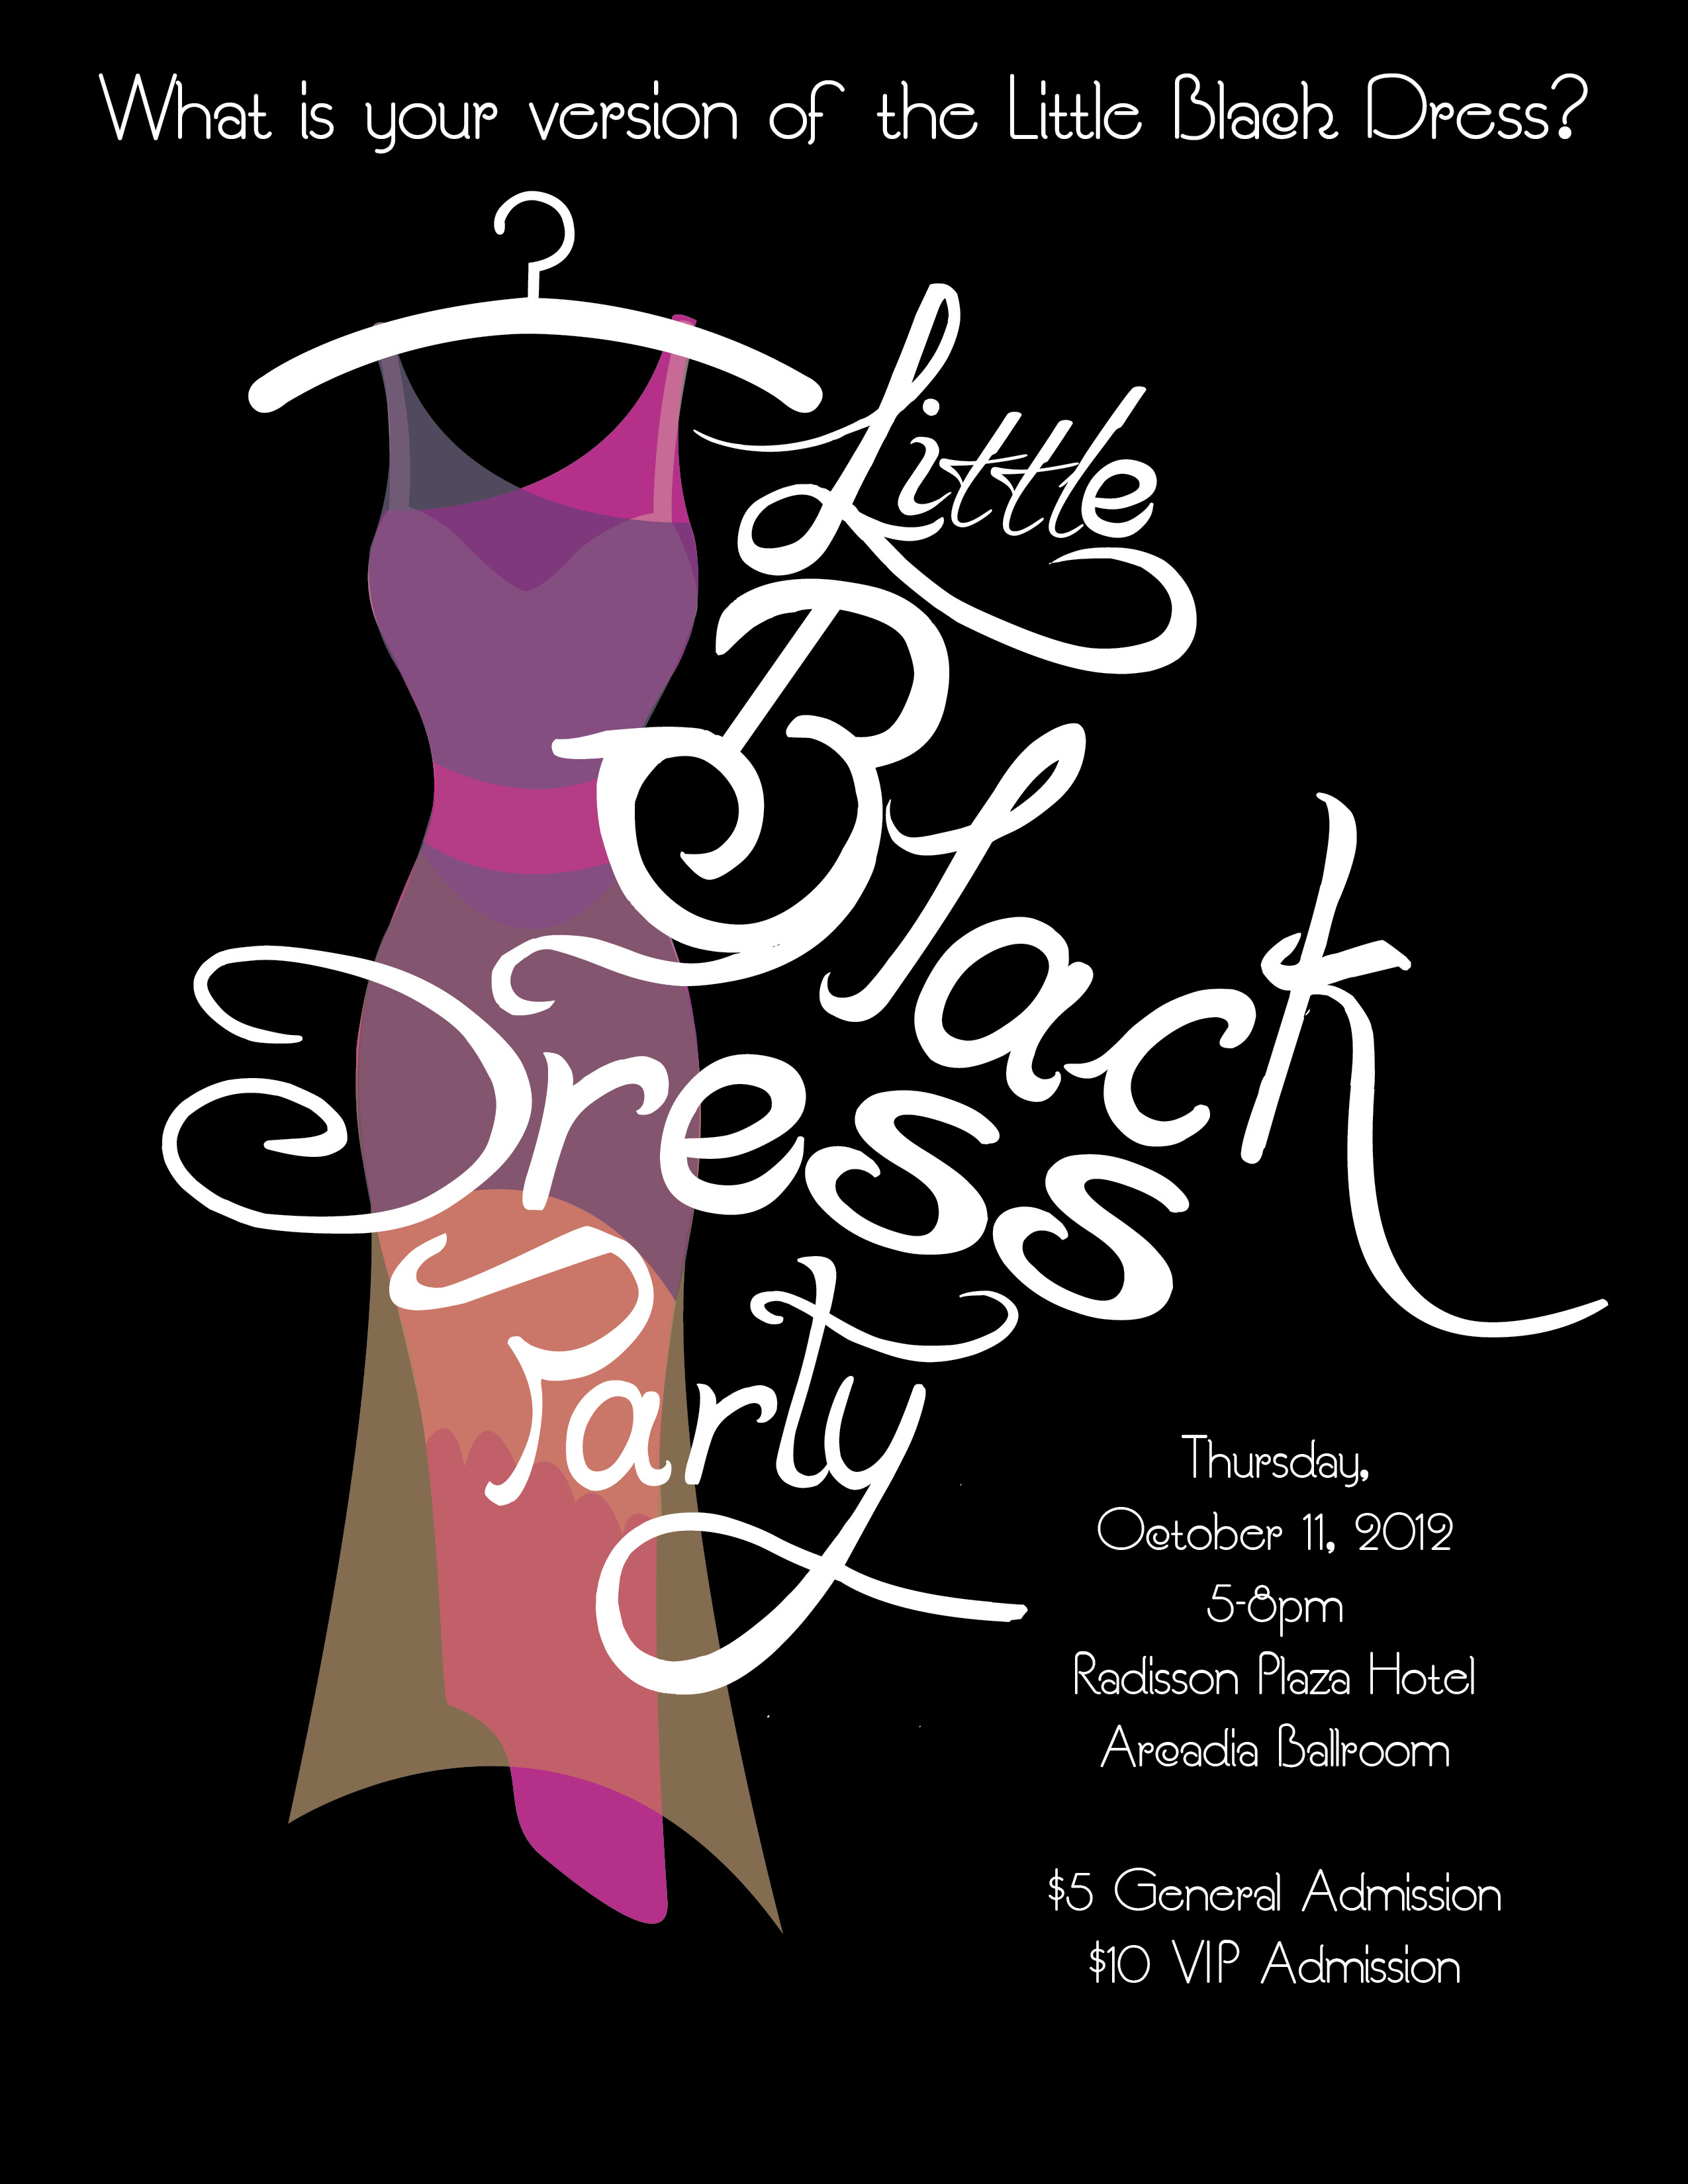 Little Black Dress Party Invite + Contest! — Selective Potential